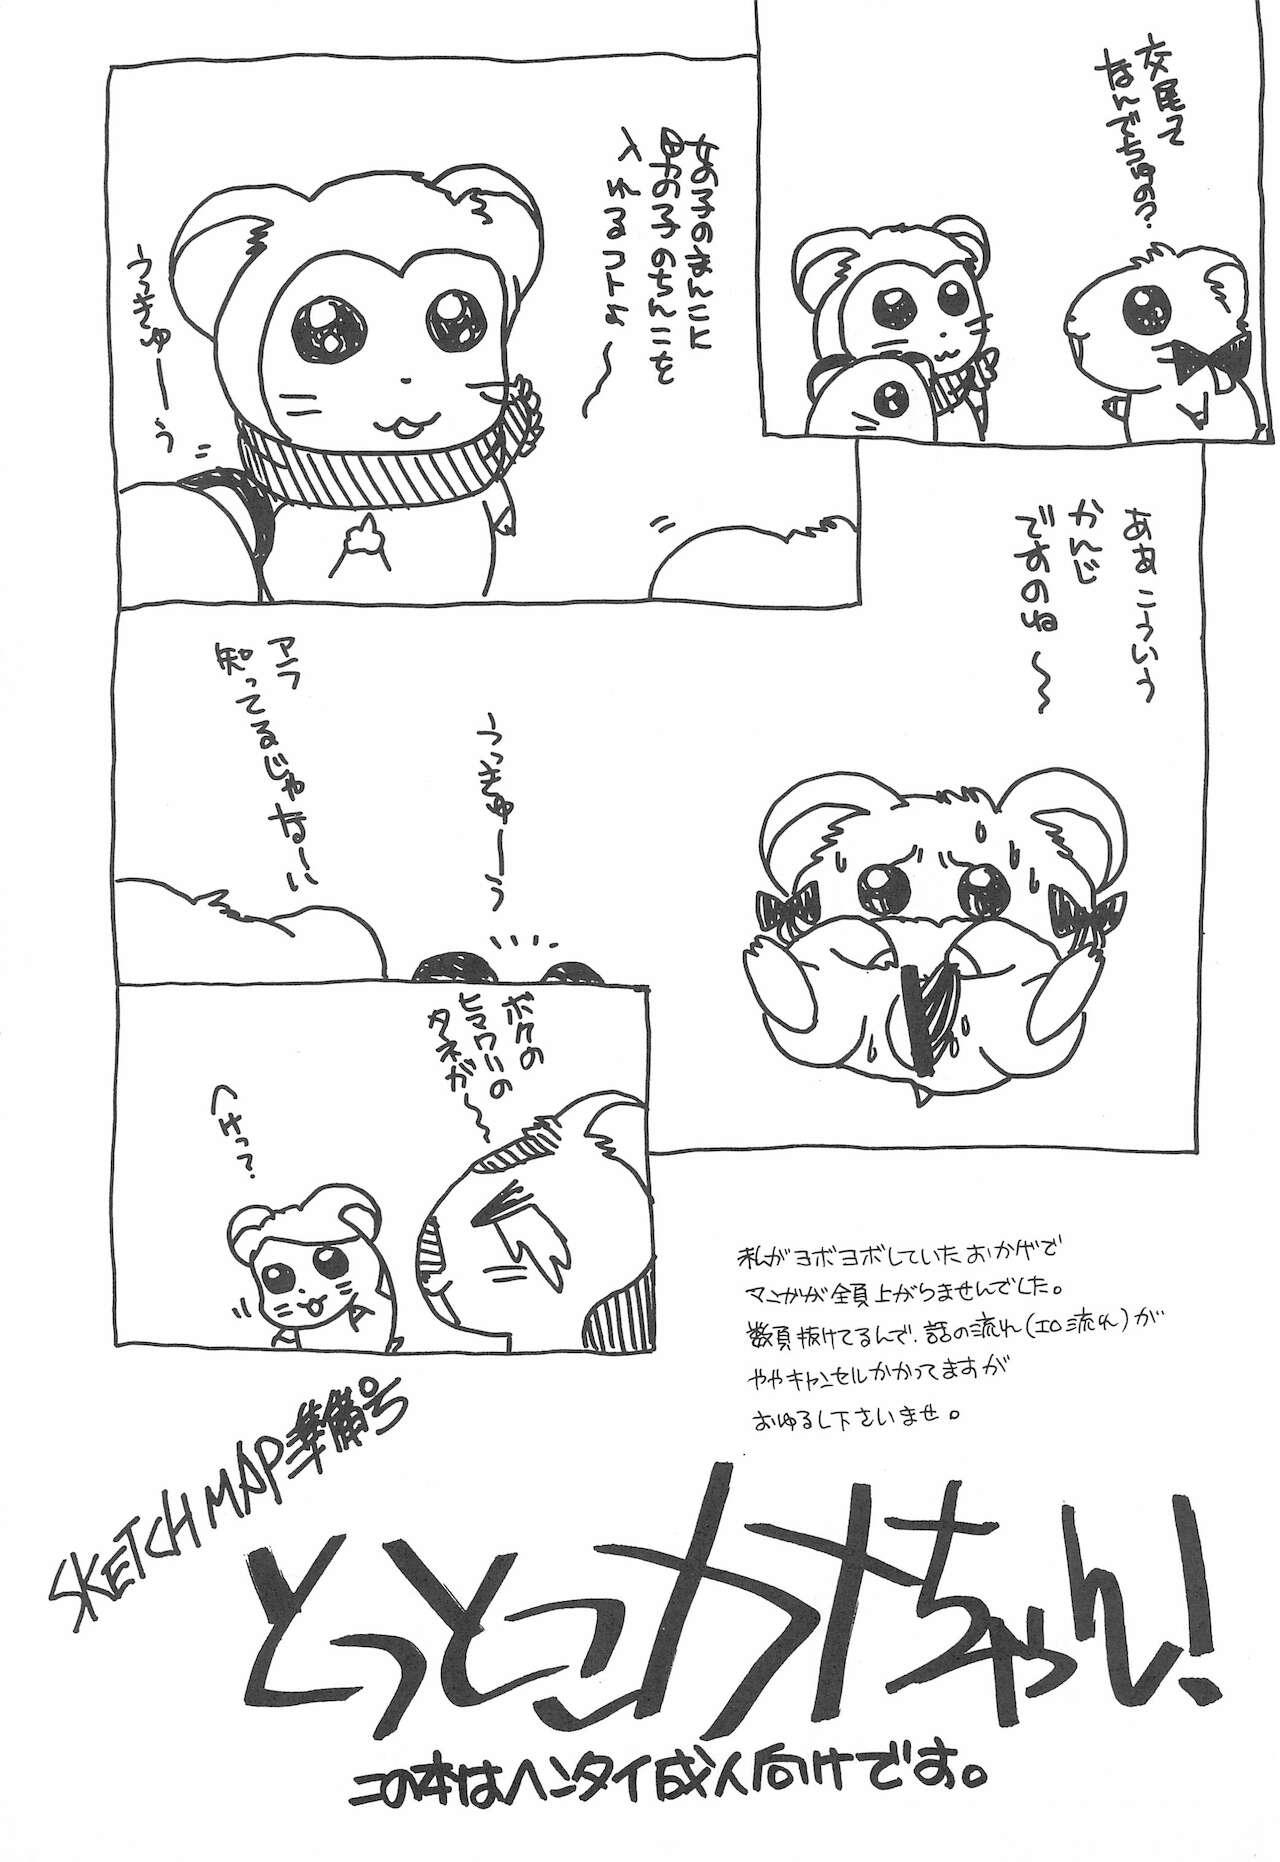 Bribe Tottoko Kana-chan! SKETCH MAP - Hamtaro Gorgeous - Page 3